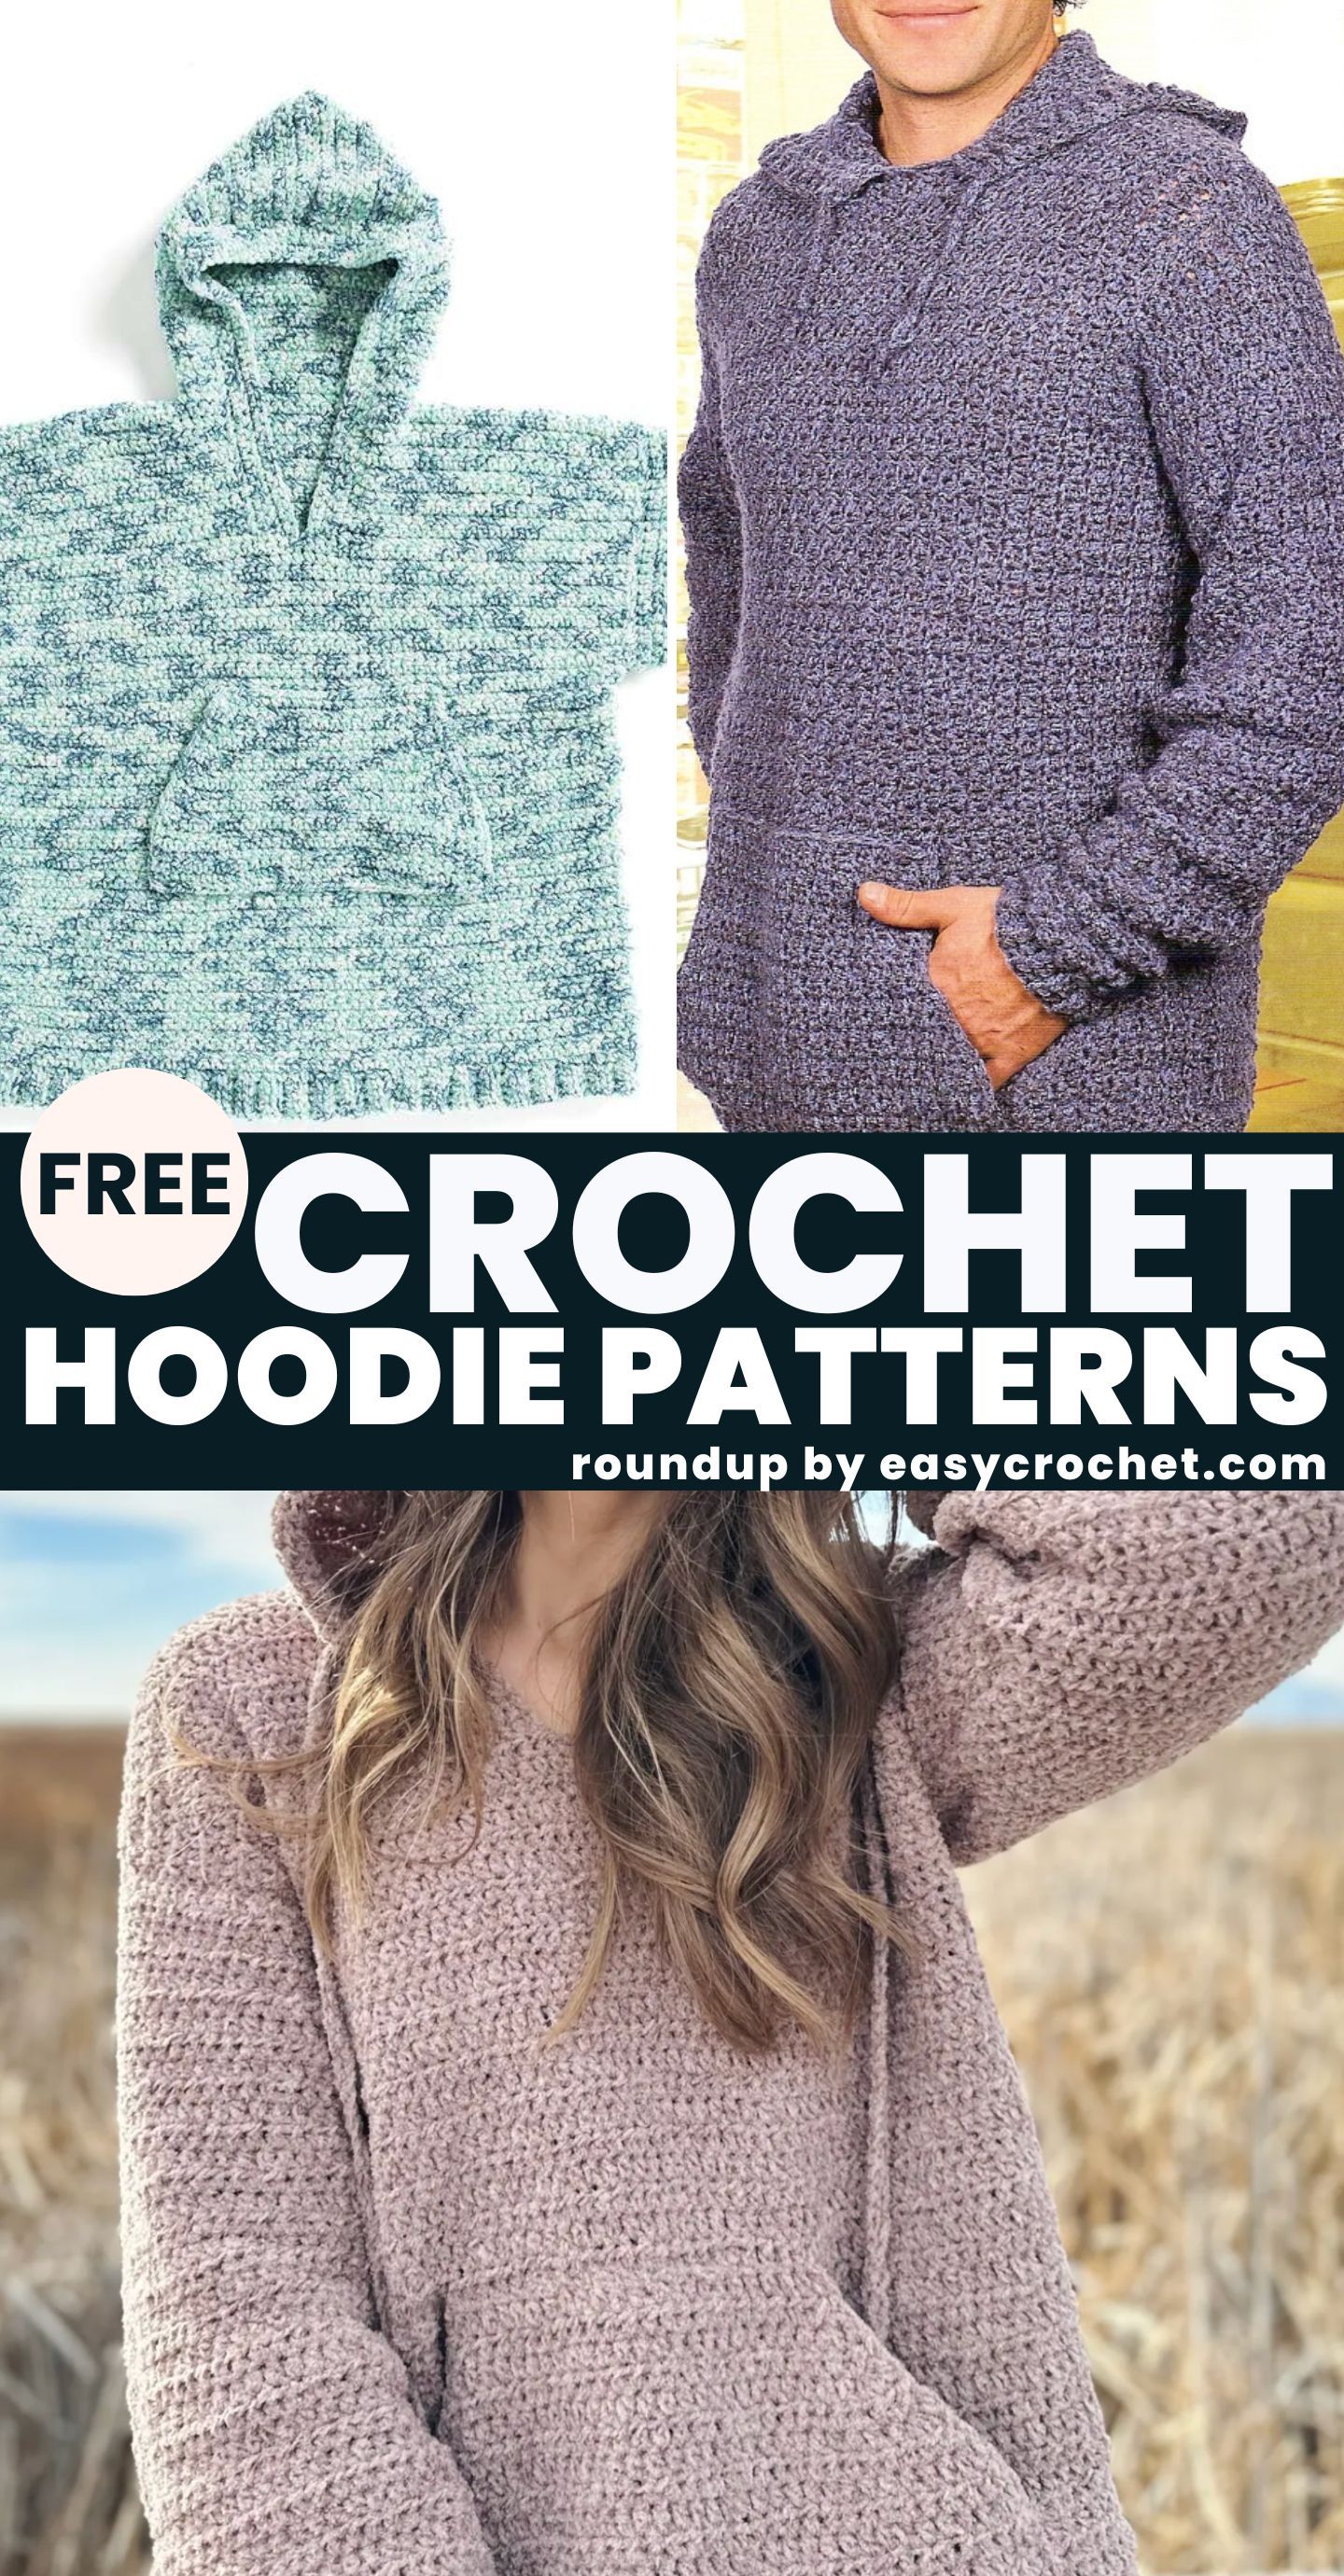 10 Crochet dress patterns to try